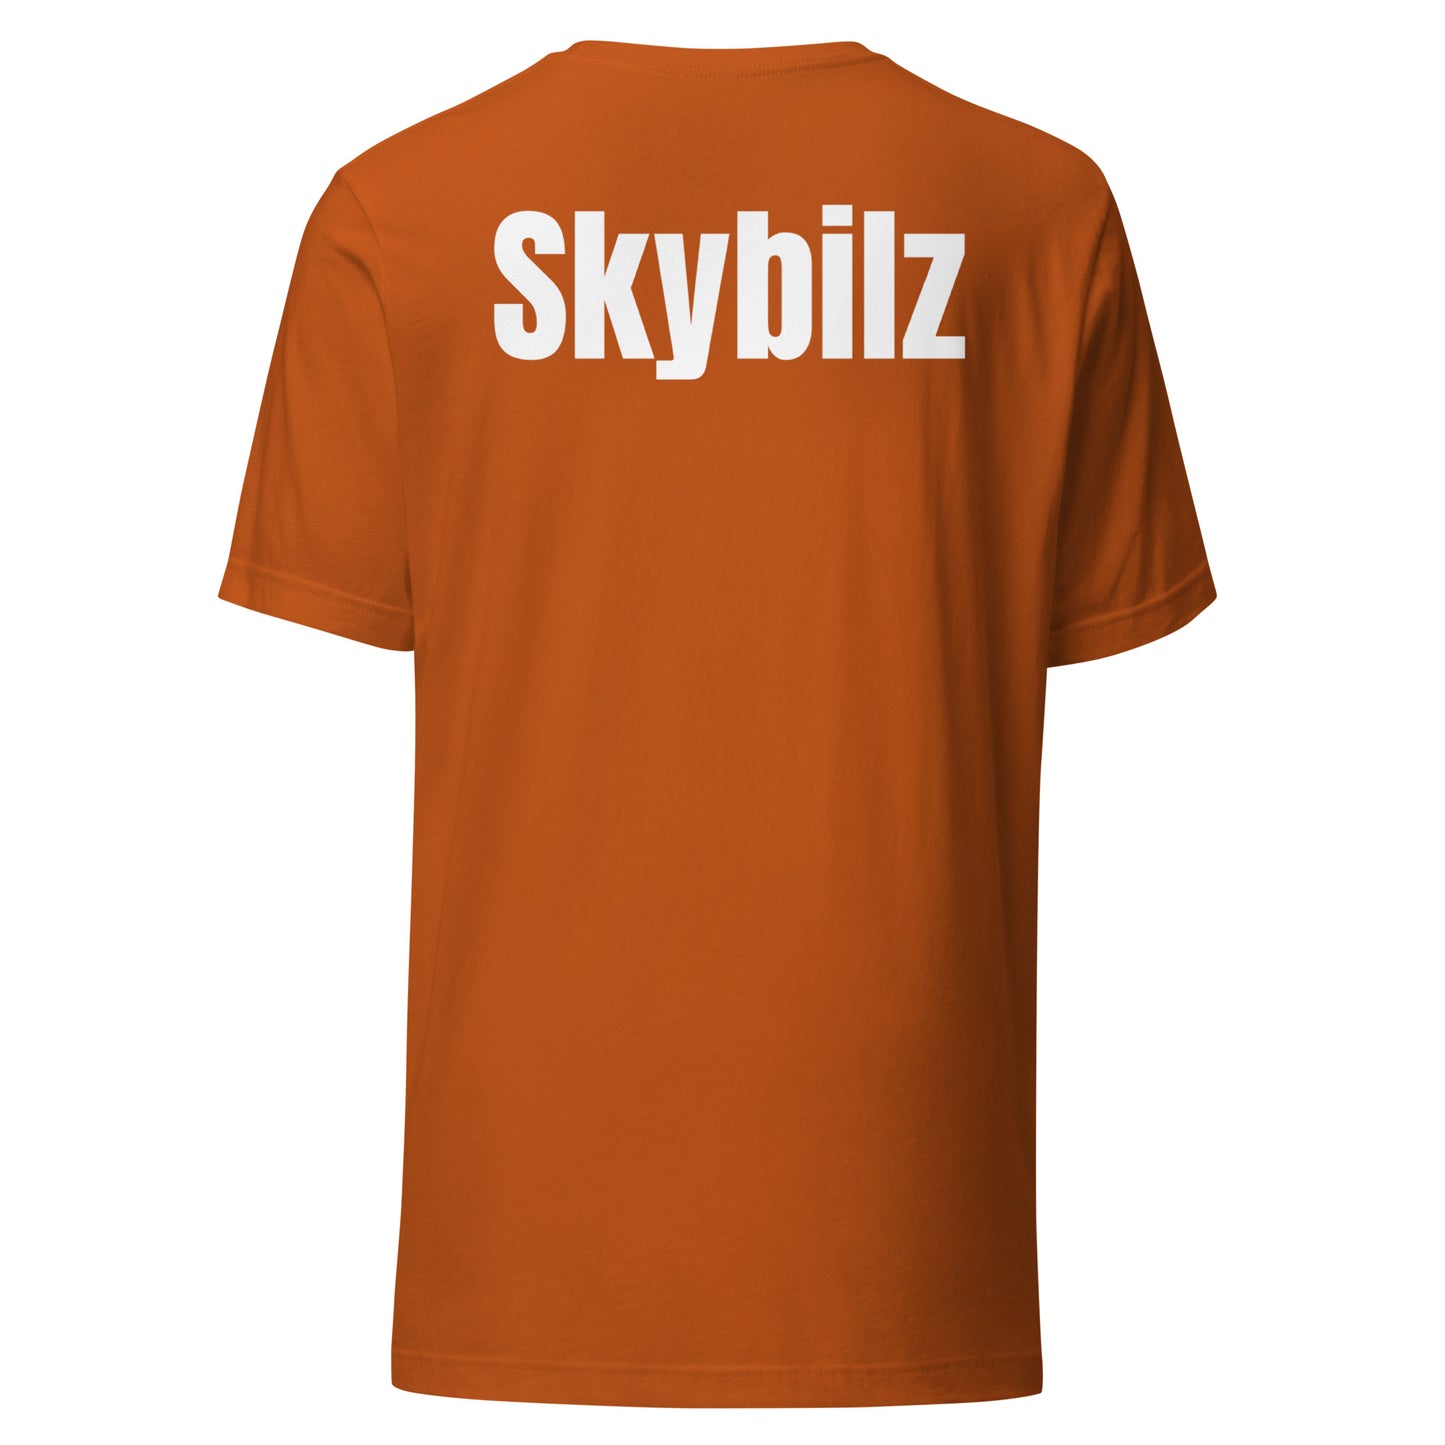 Skybilz - Unisex t-shirt - Sky